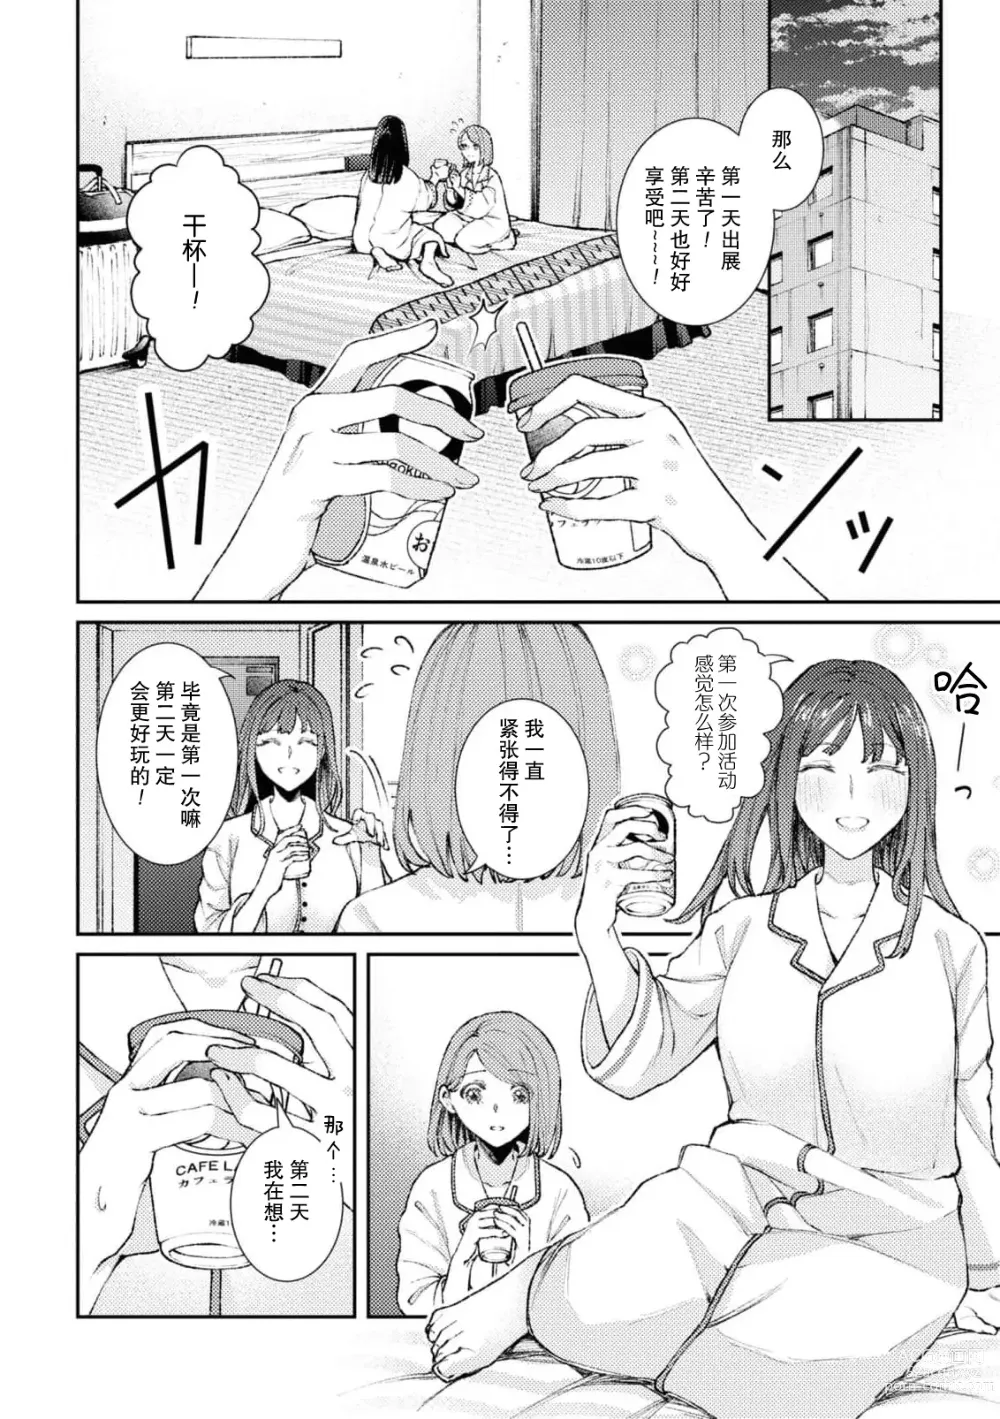 Page 7 of manga 修女姐妹夜间之事